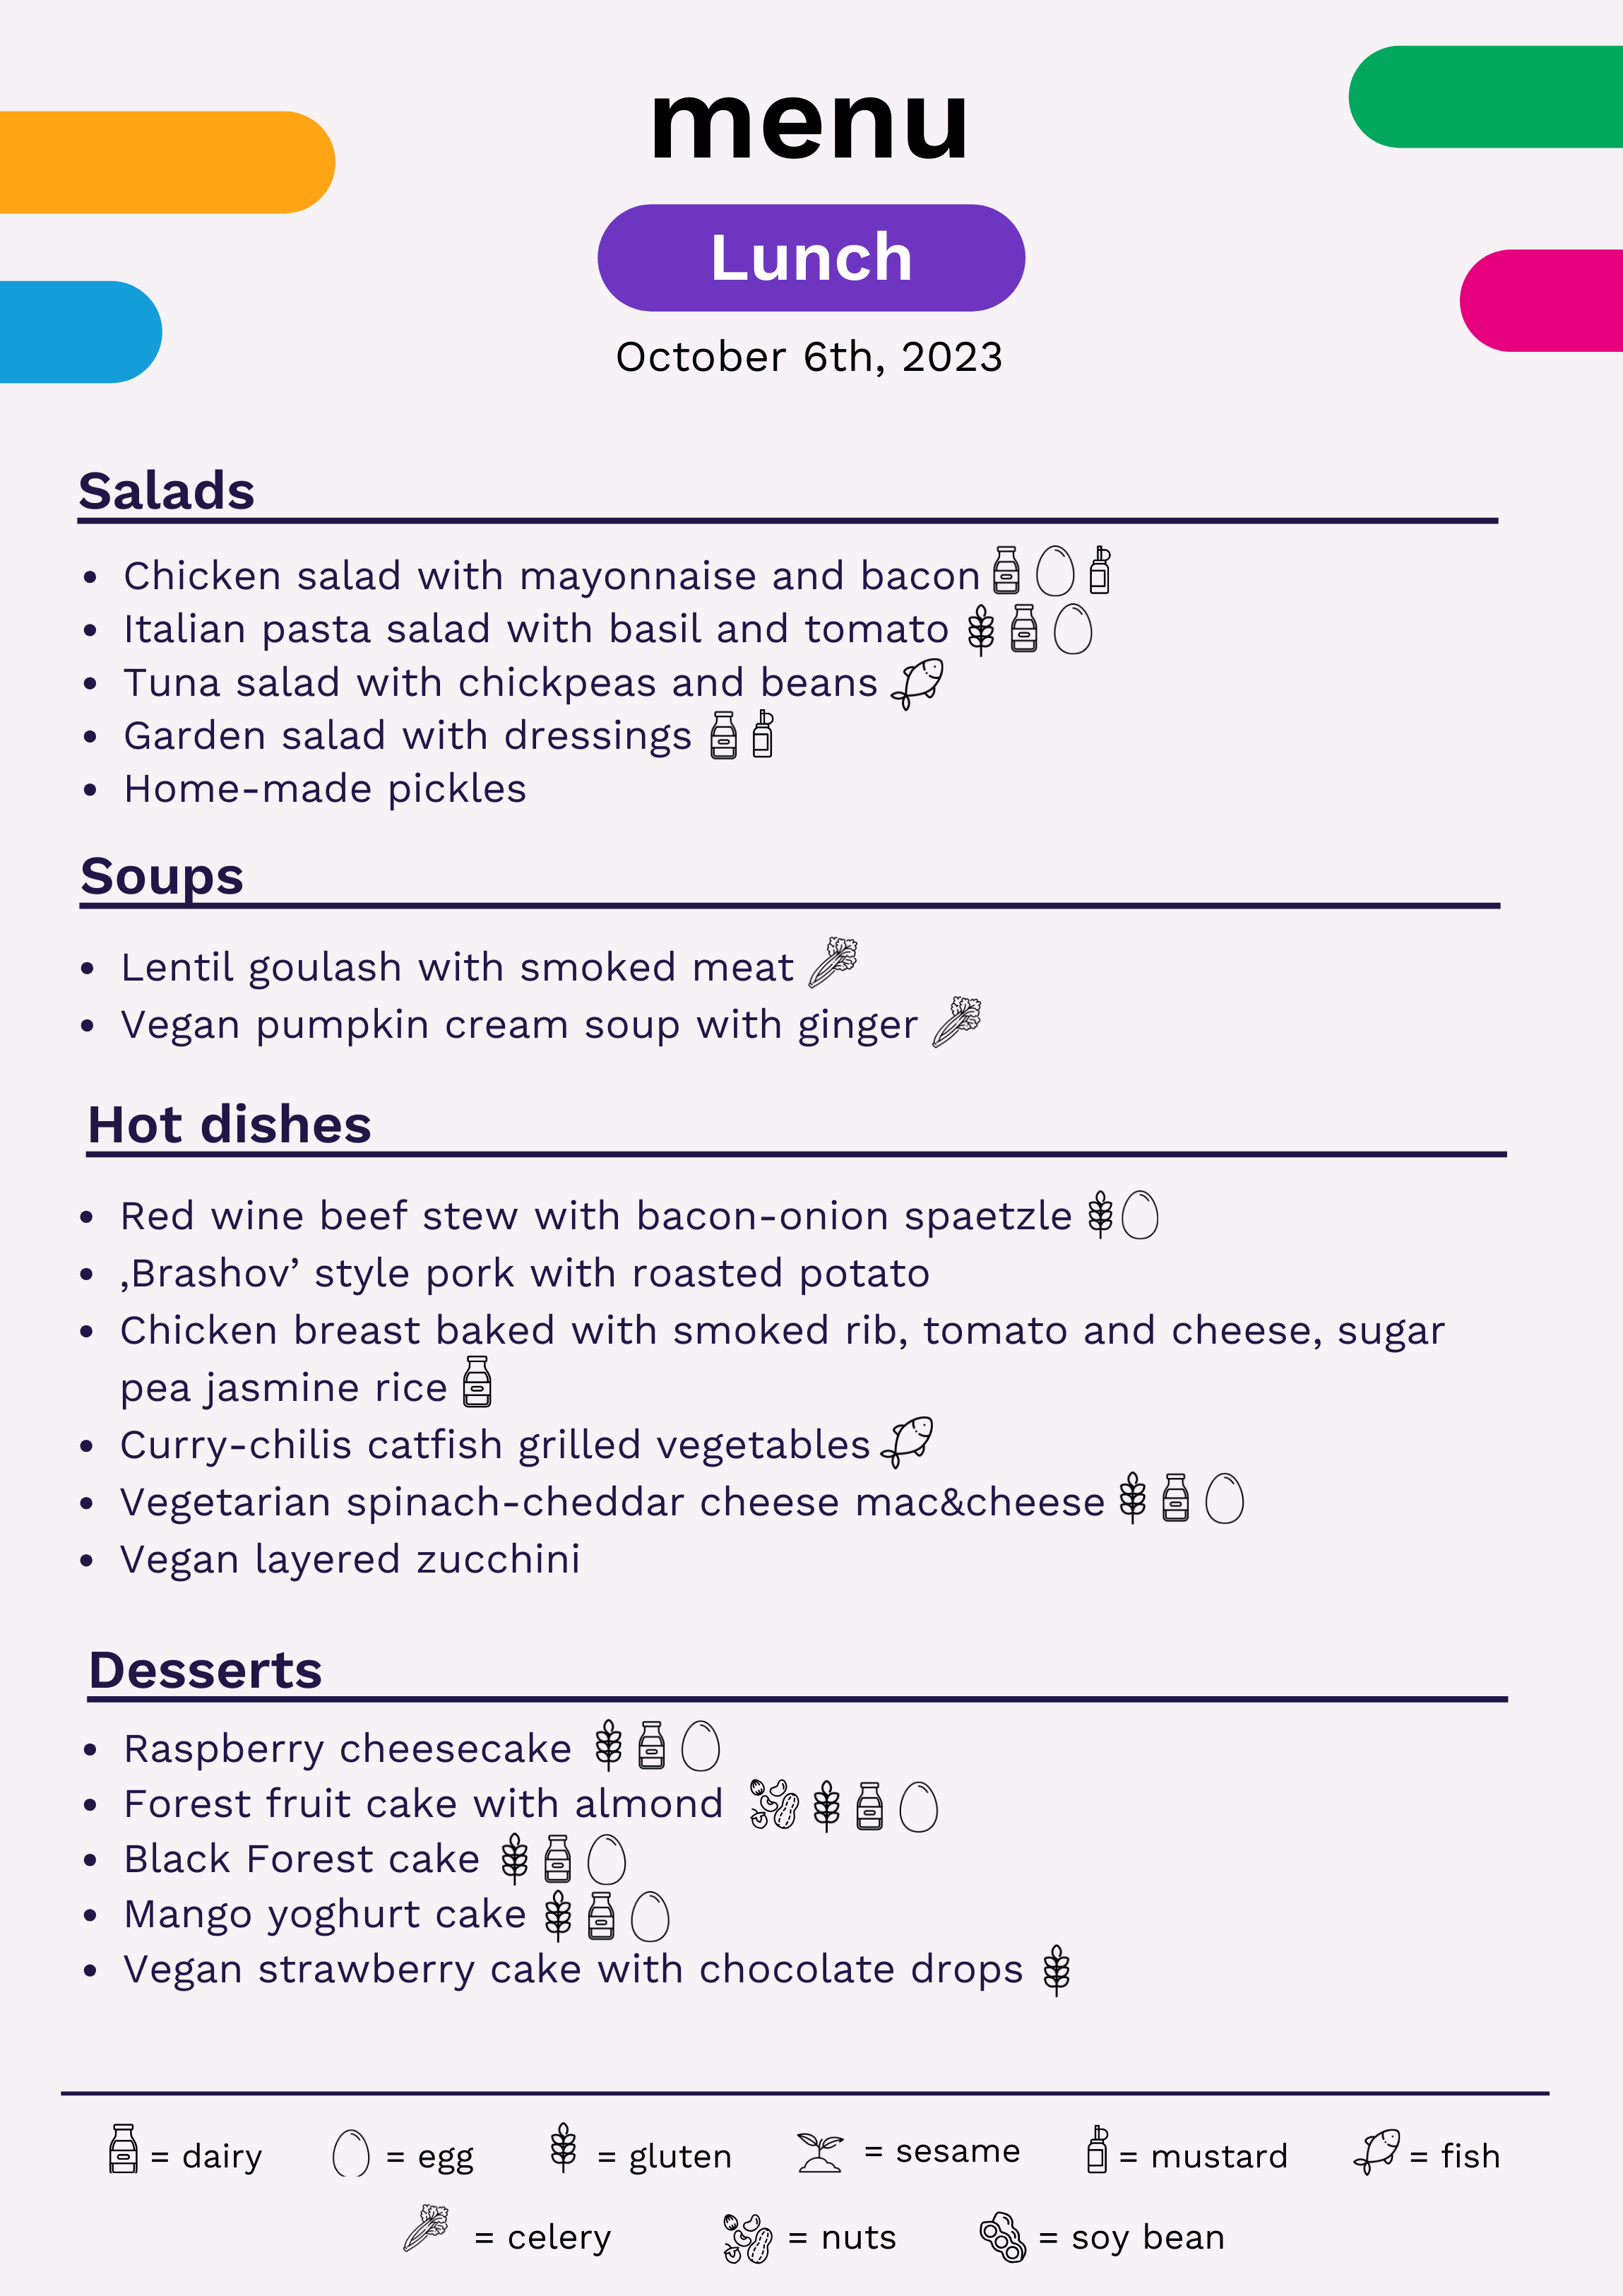 crunch.2023.food-menu.image.5